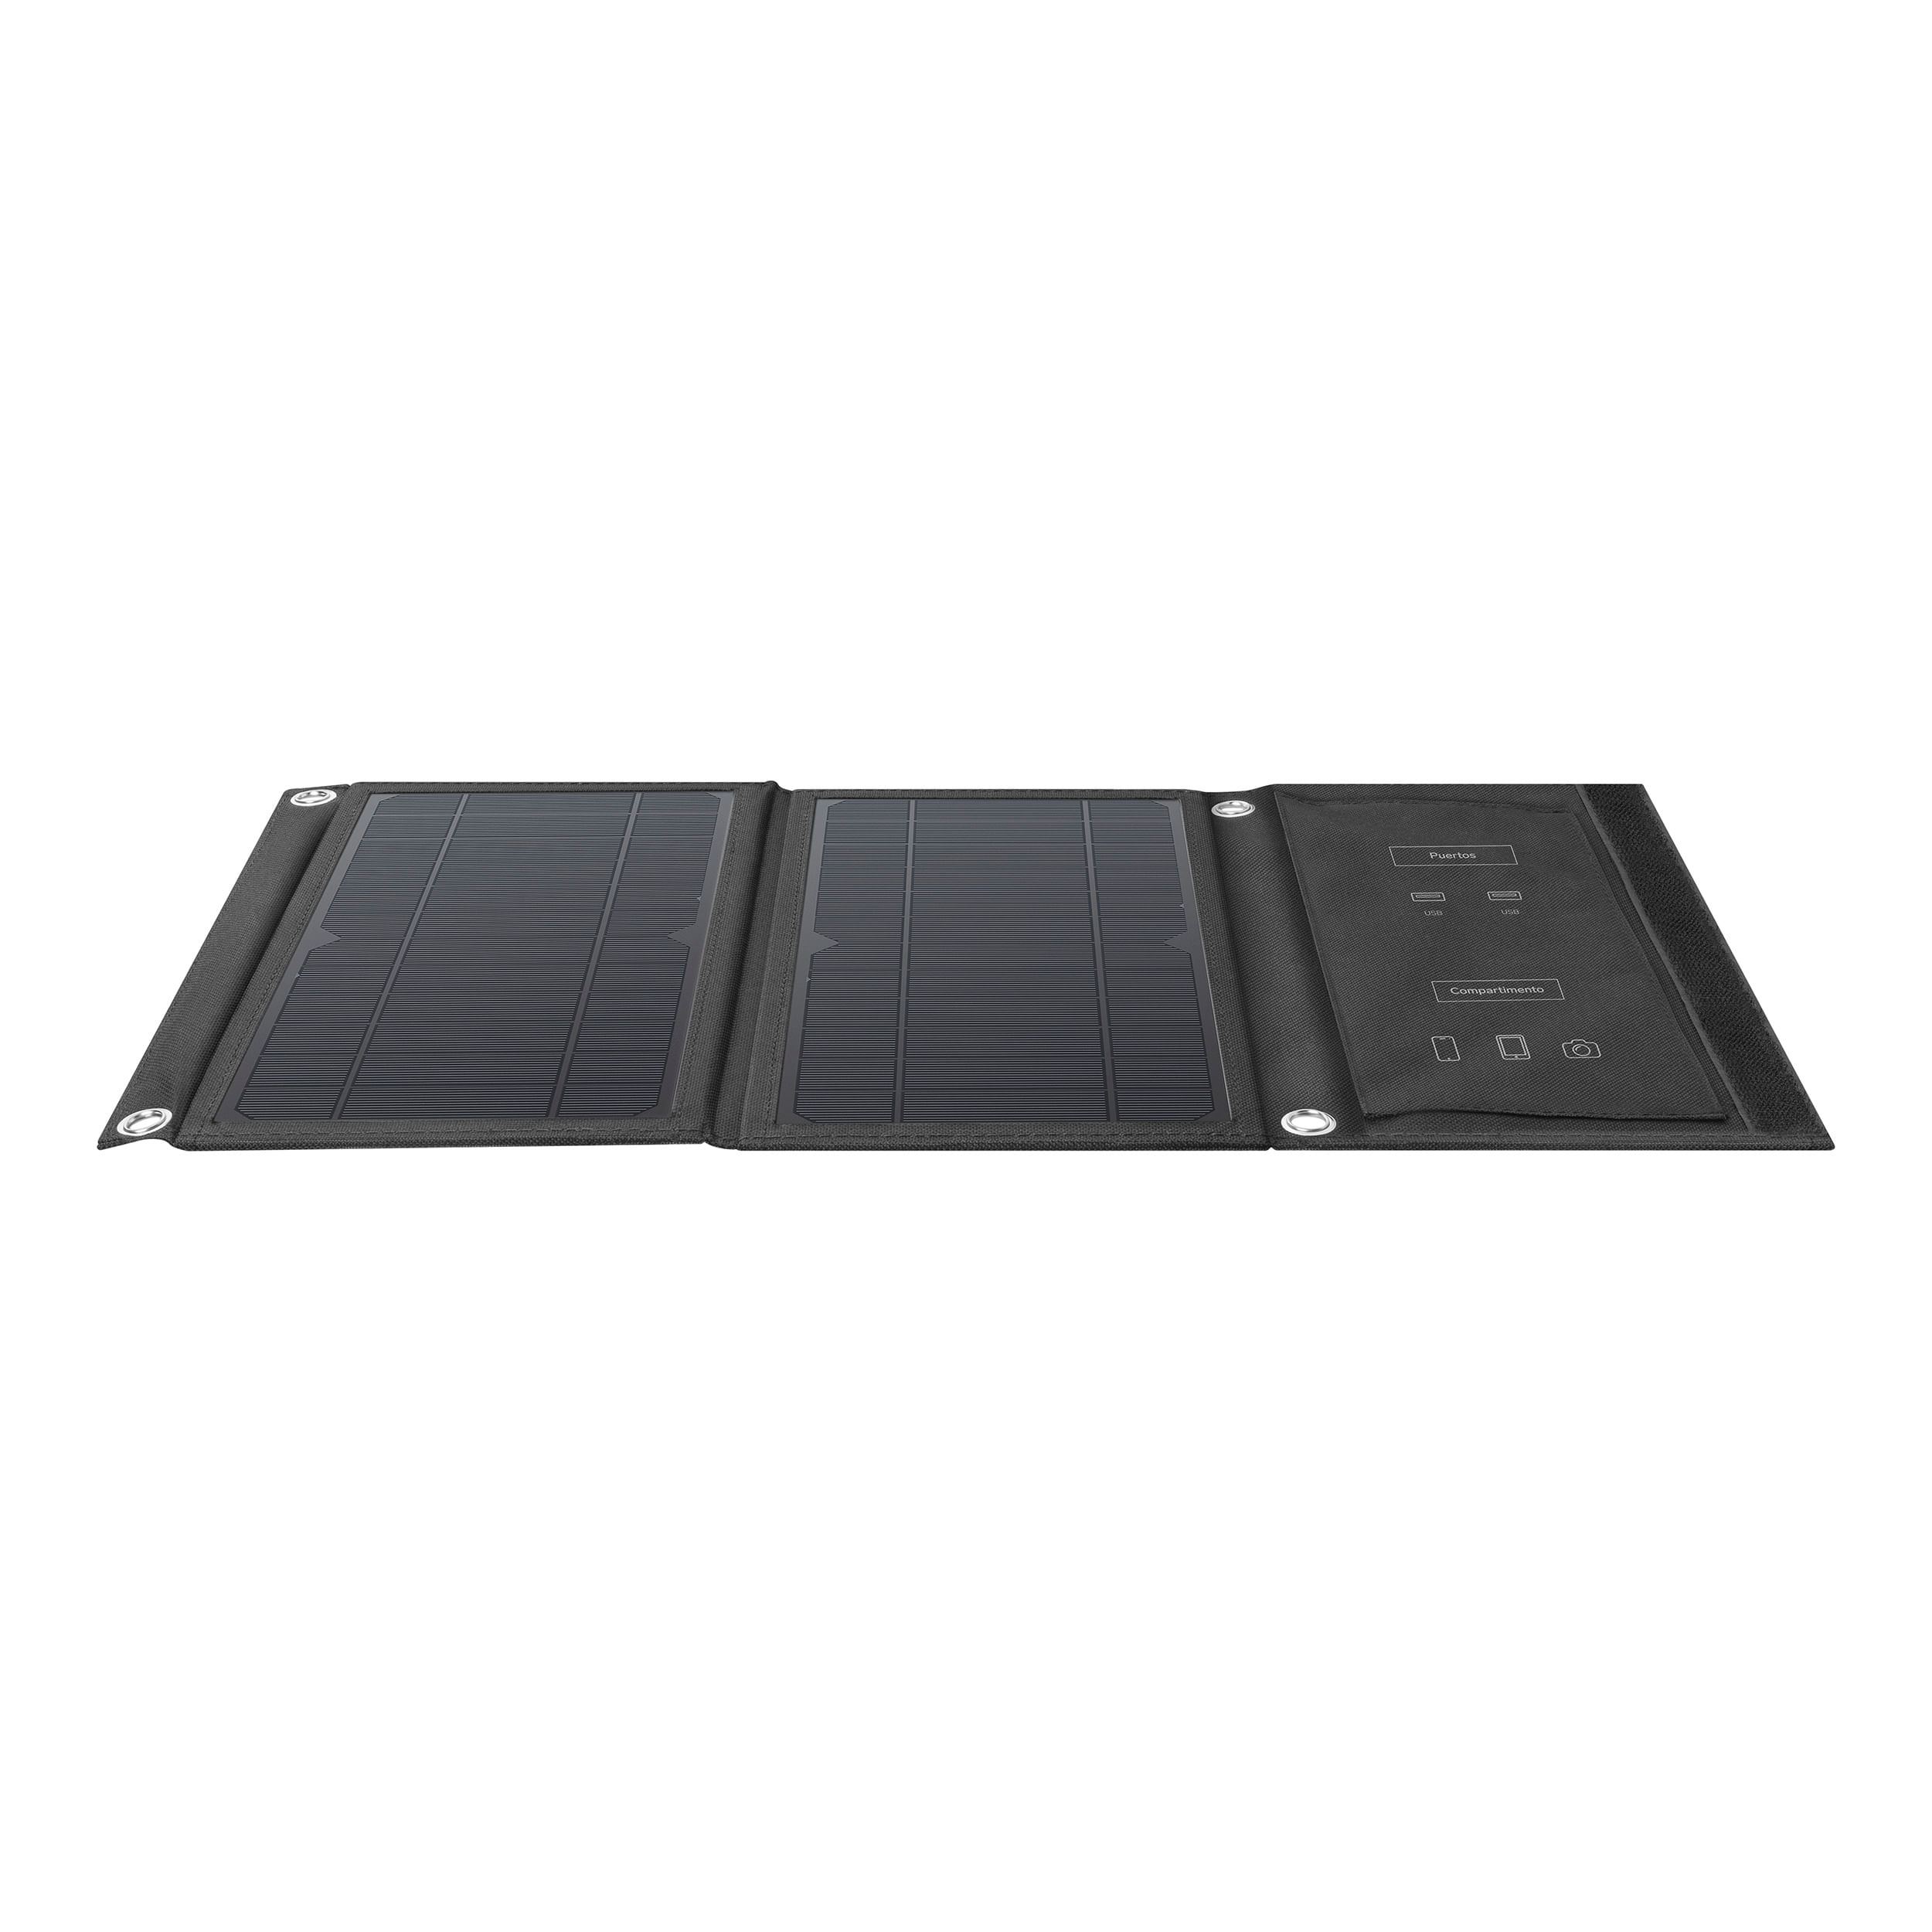 Cargador solar portátil de 15 W - Steren Colombia